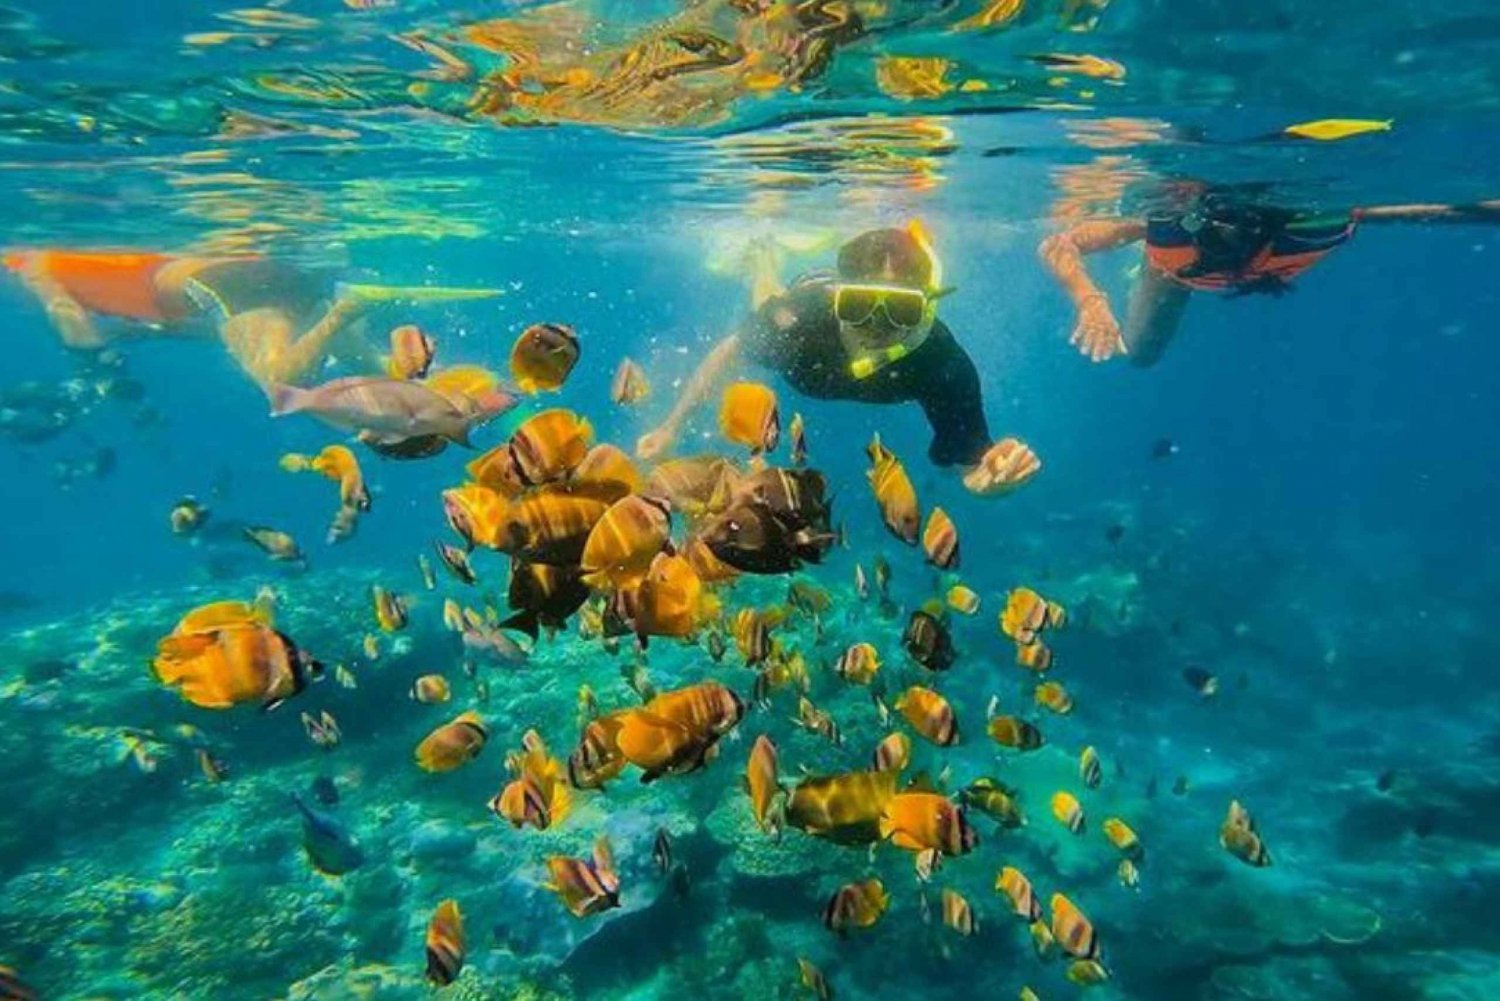 East Bali : Blue Lagoon Snorkeling - All inclusive